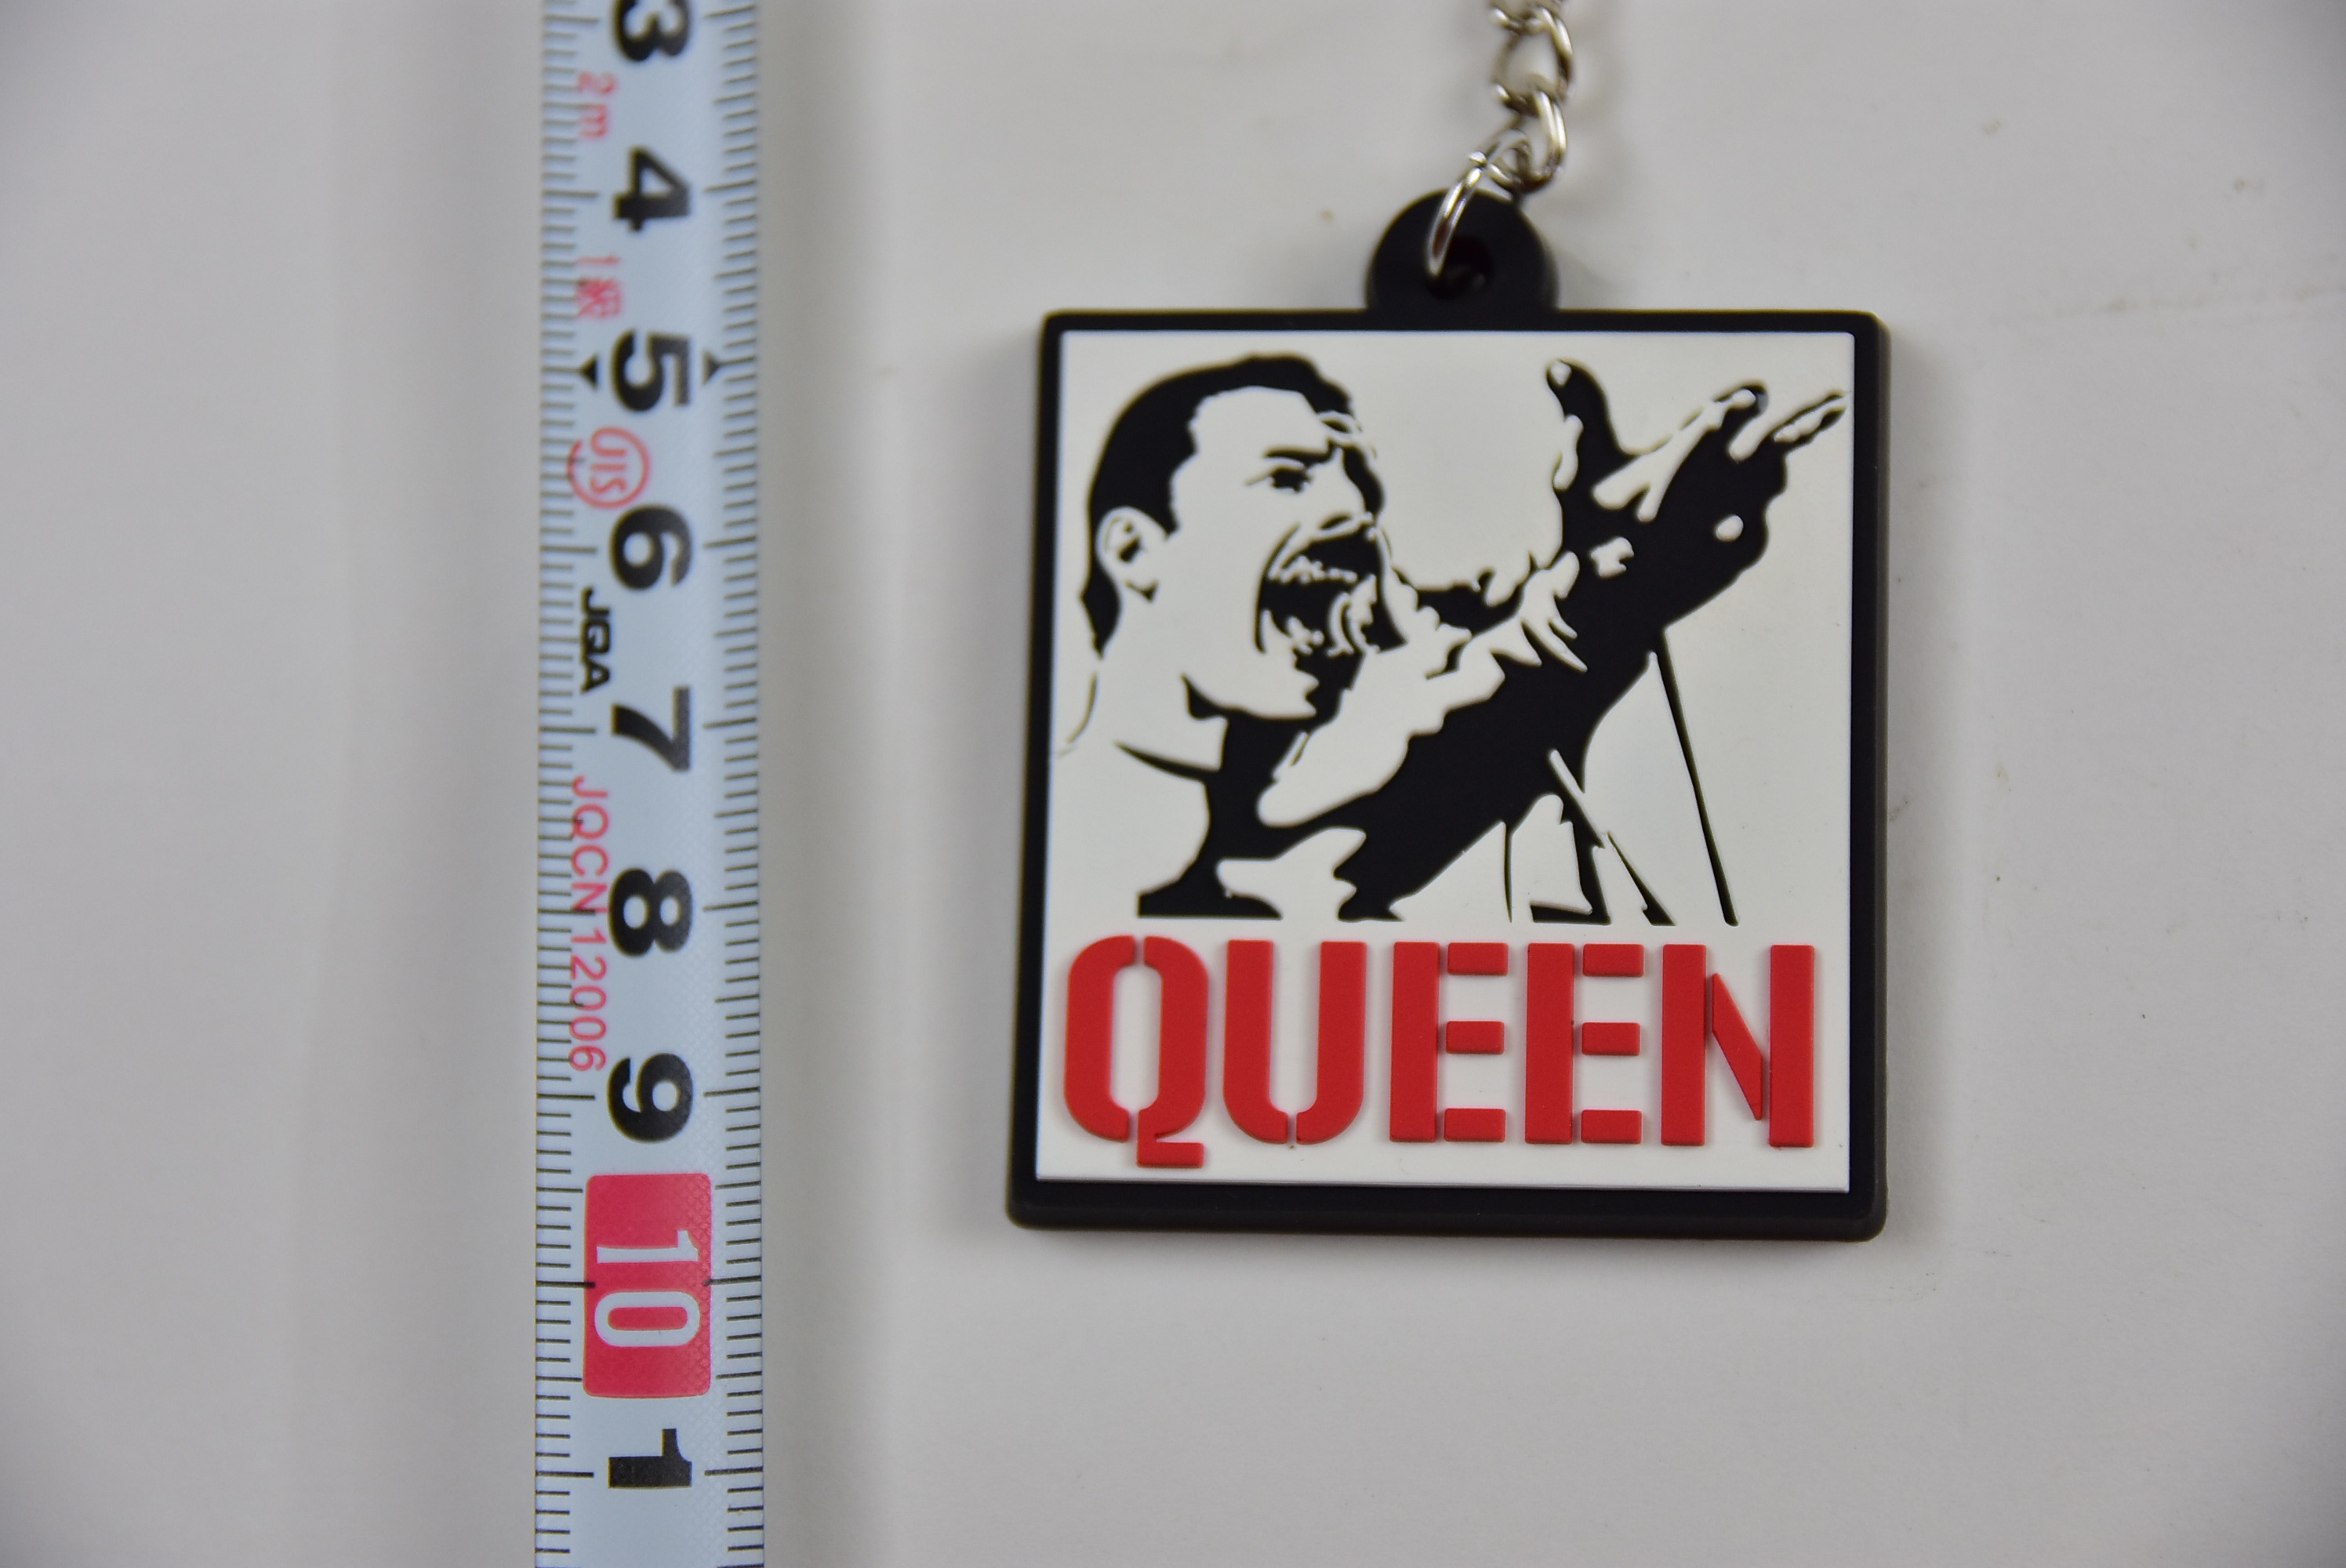  Queen QUEEN Raver брелок для ключа freti- Mercury k17